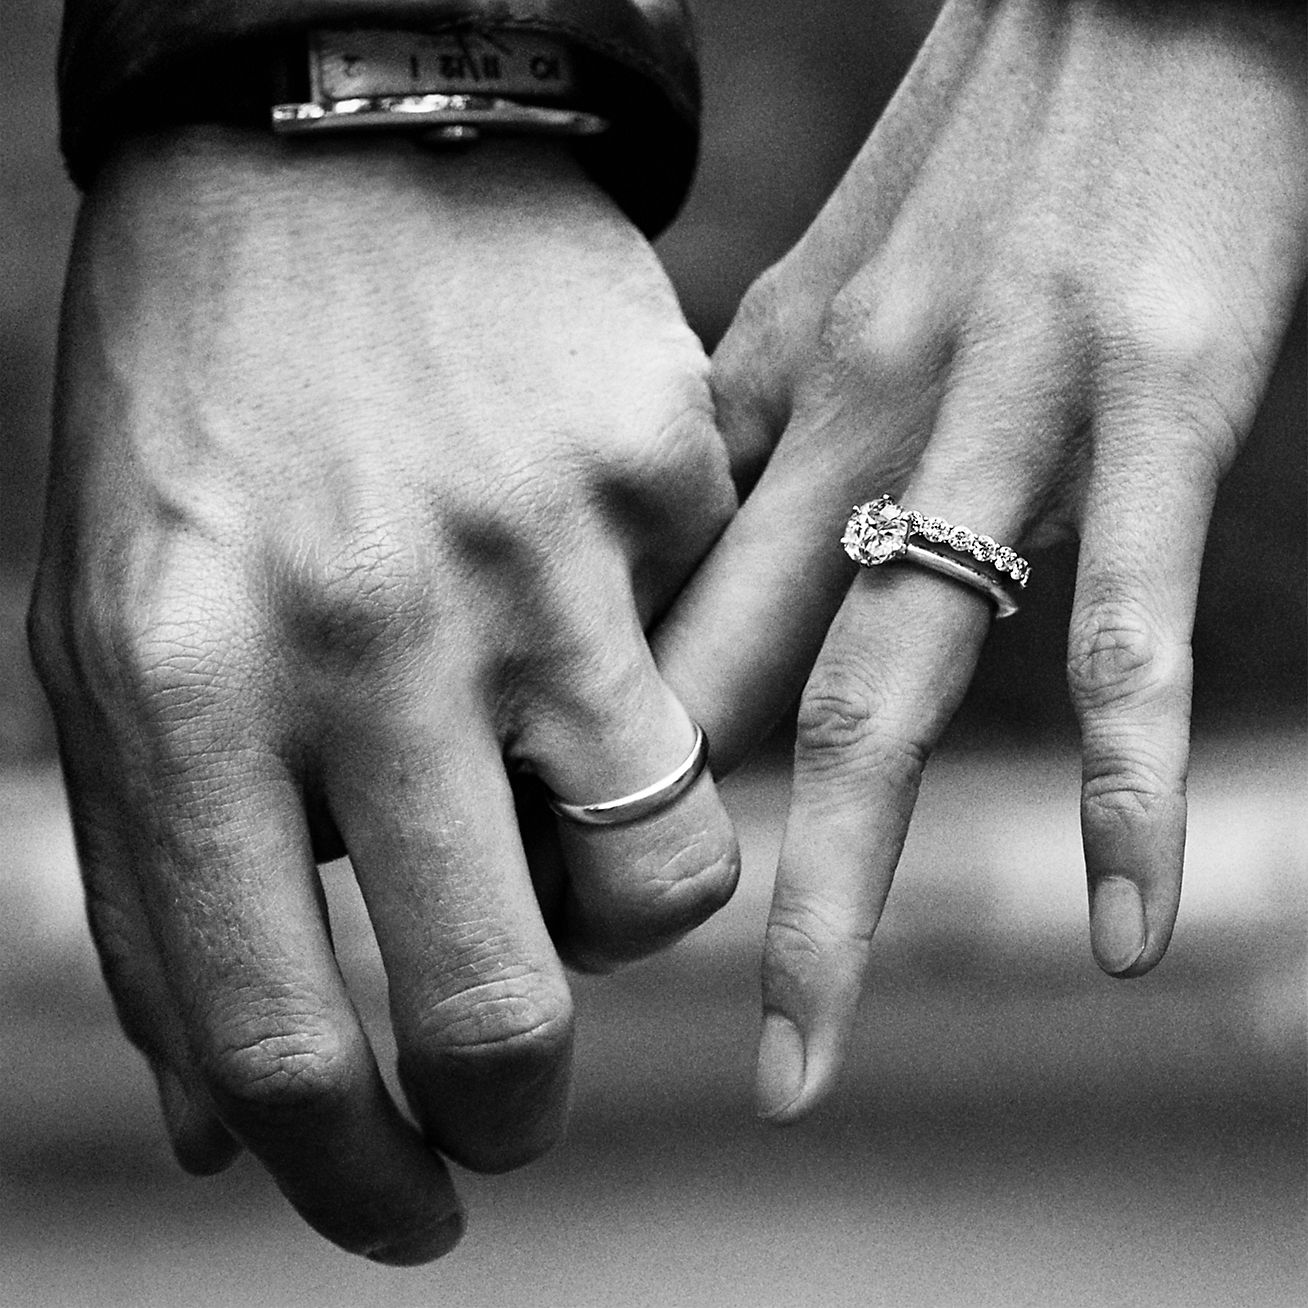 Tiffany Soleste Half Eternity Ring in Platinum with Diamonds | Tiffany & Co.